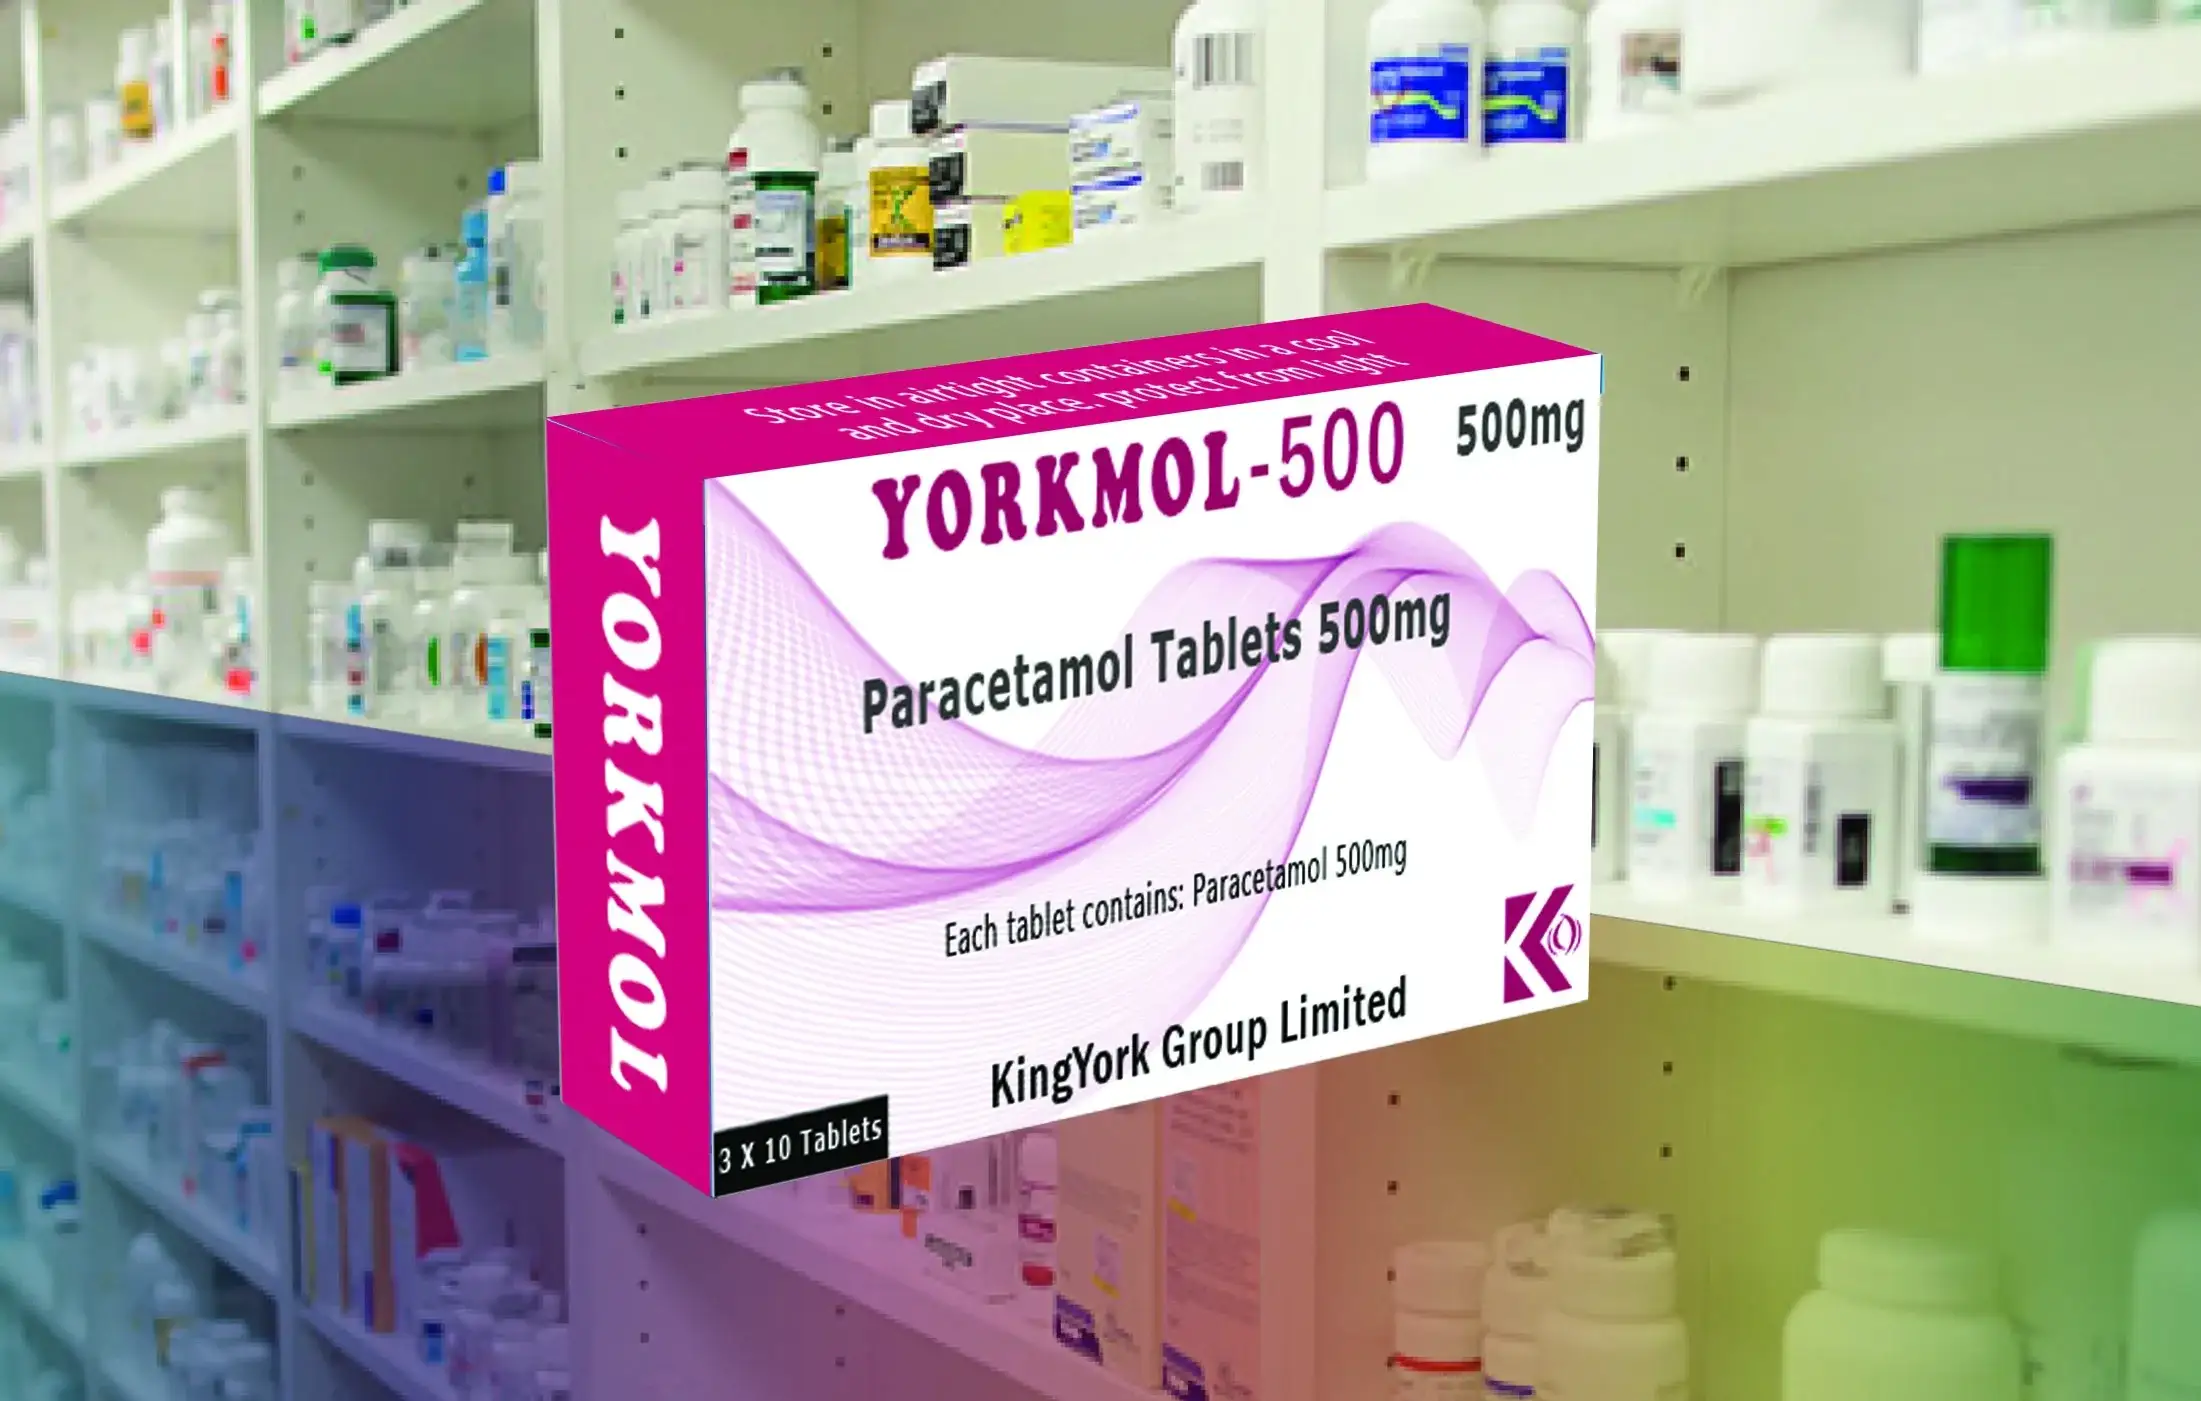 'paracetamol injections', 'analgesic ampoules', 'paracetamol 300mg injection', 'paracetamol'